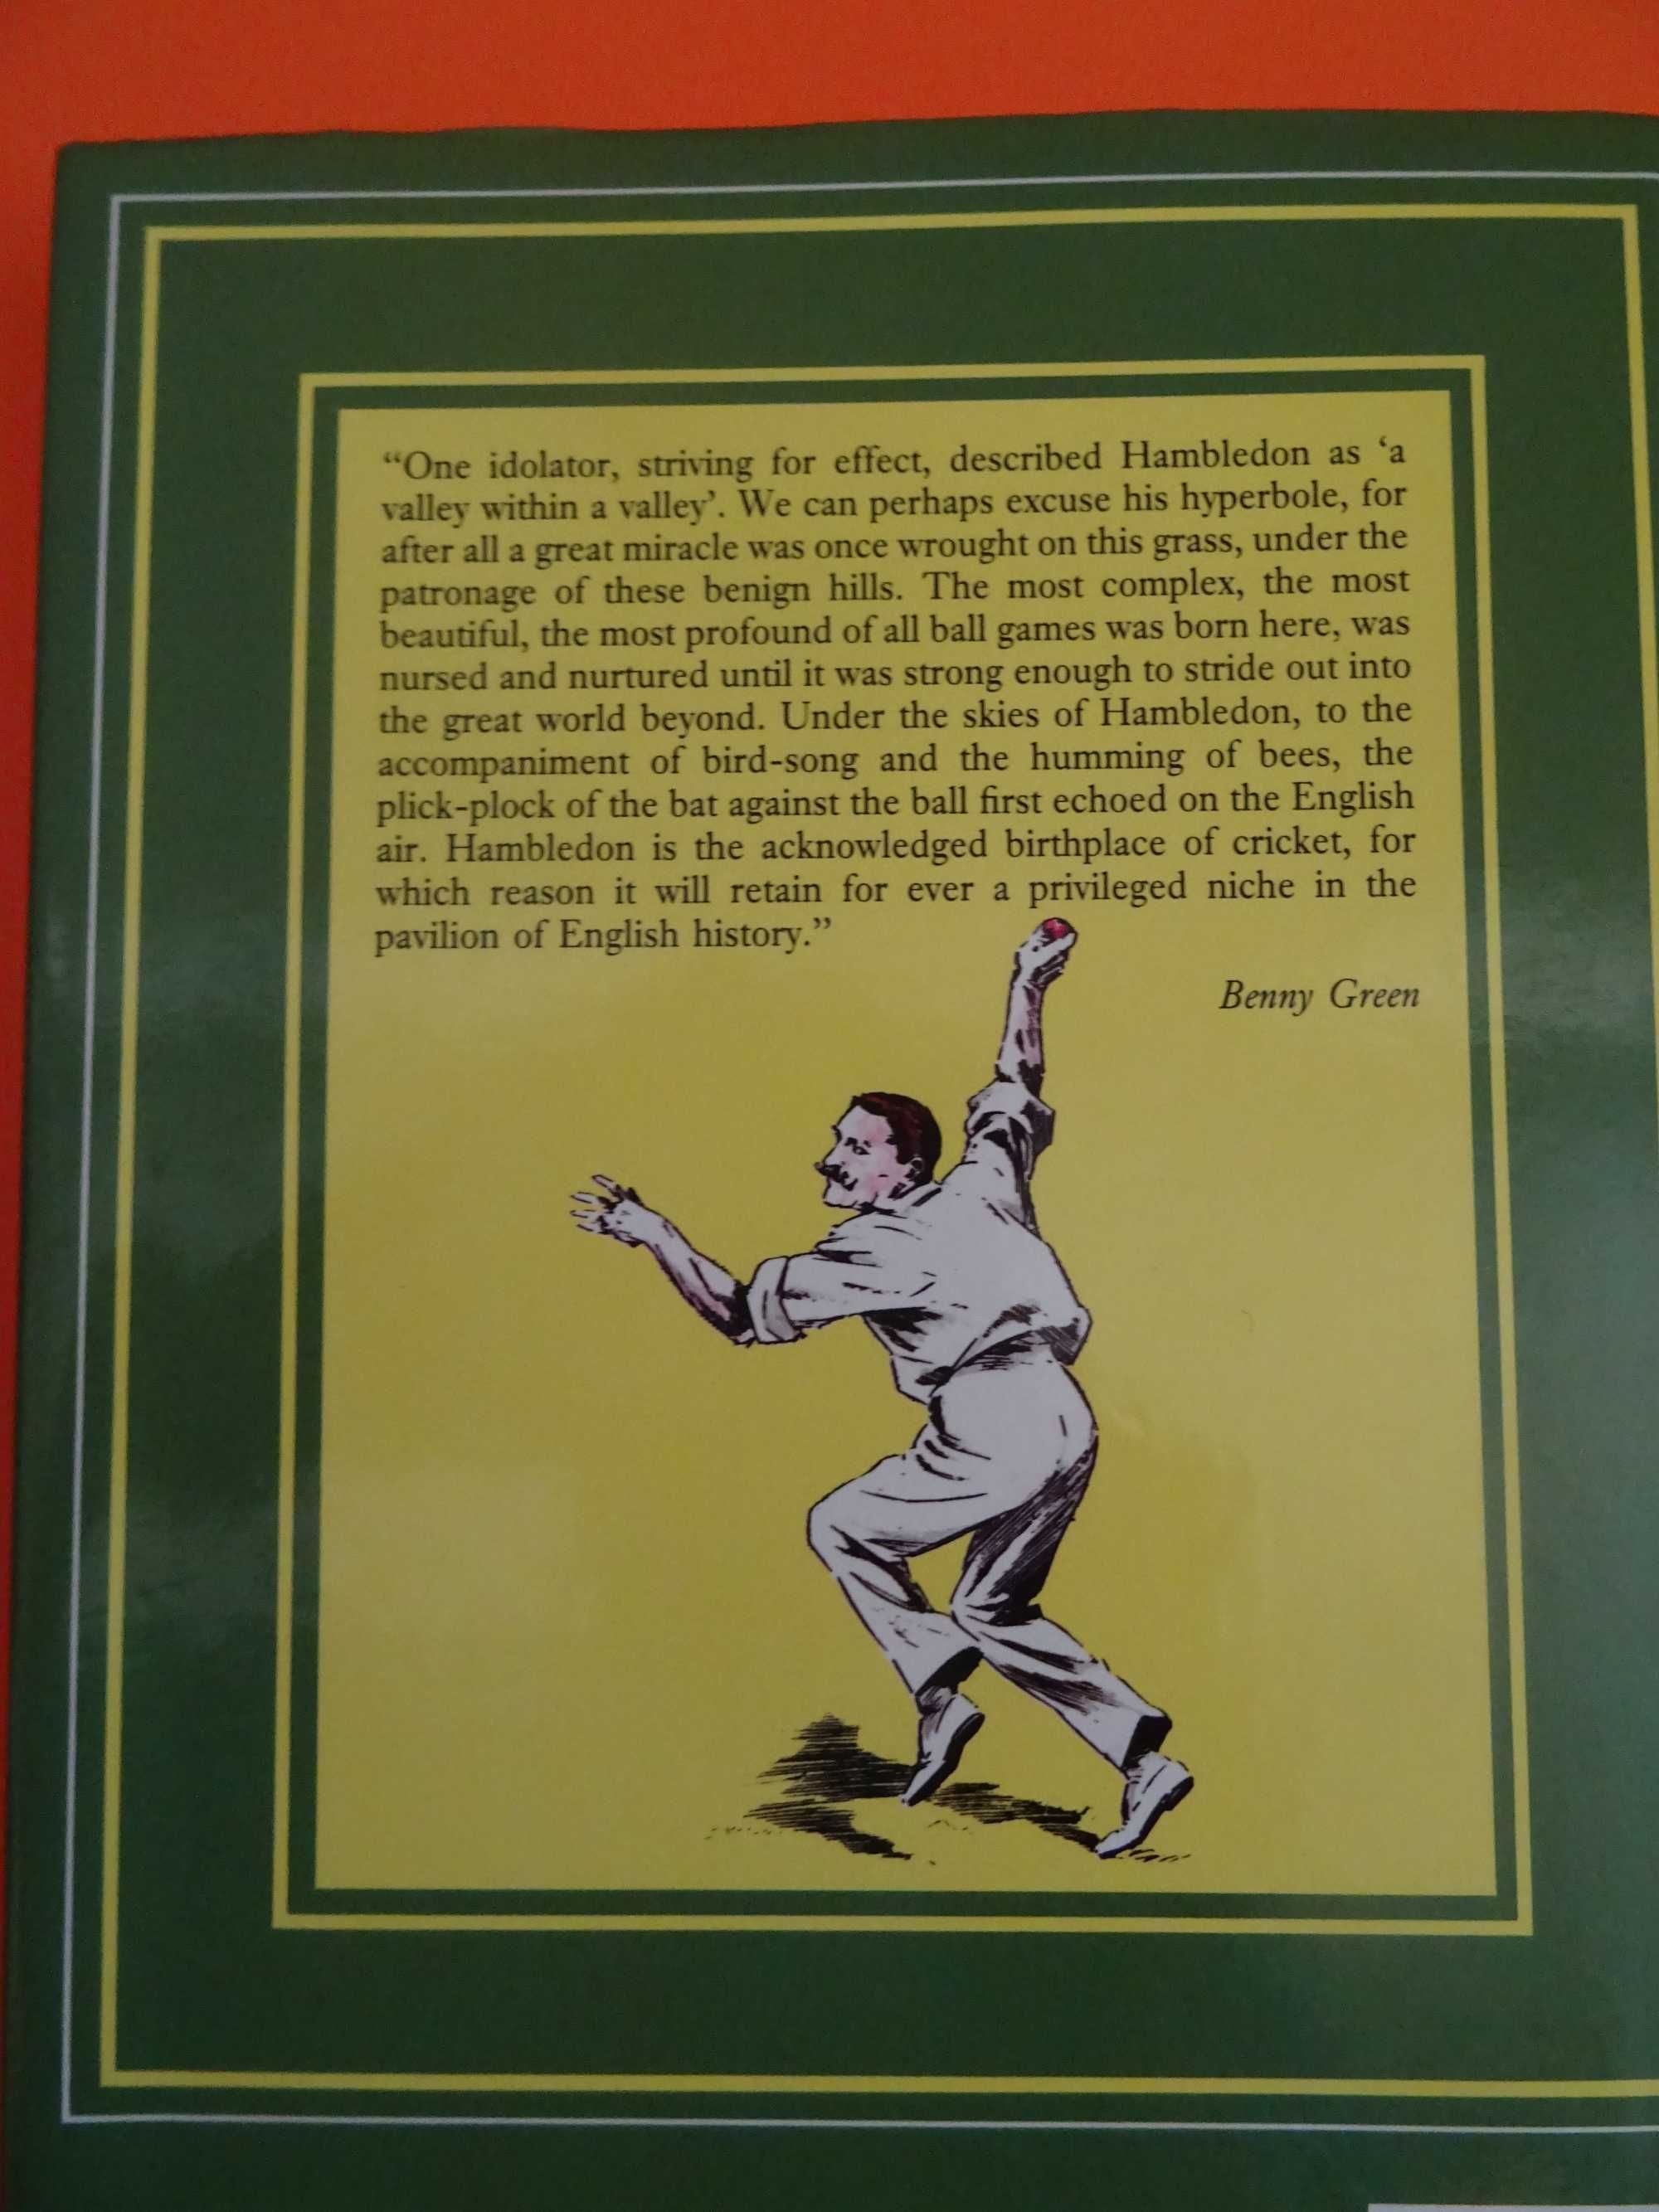 A history of Cricket - Benny Green